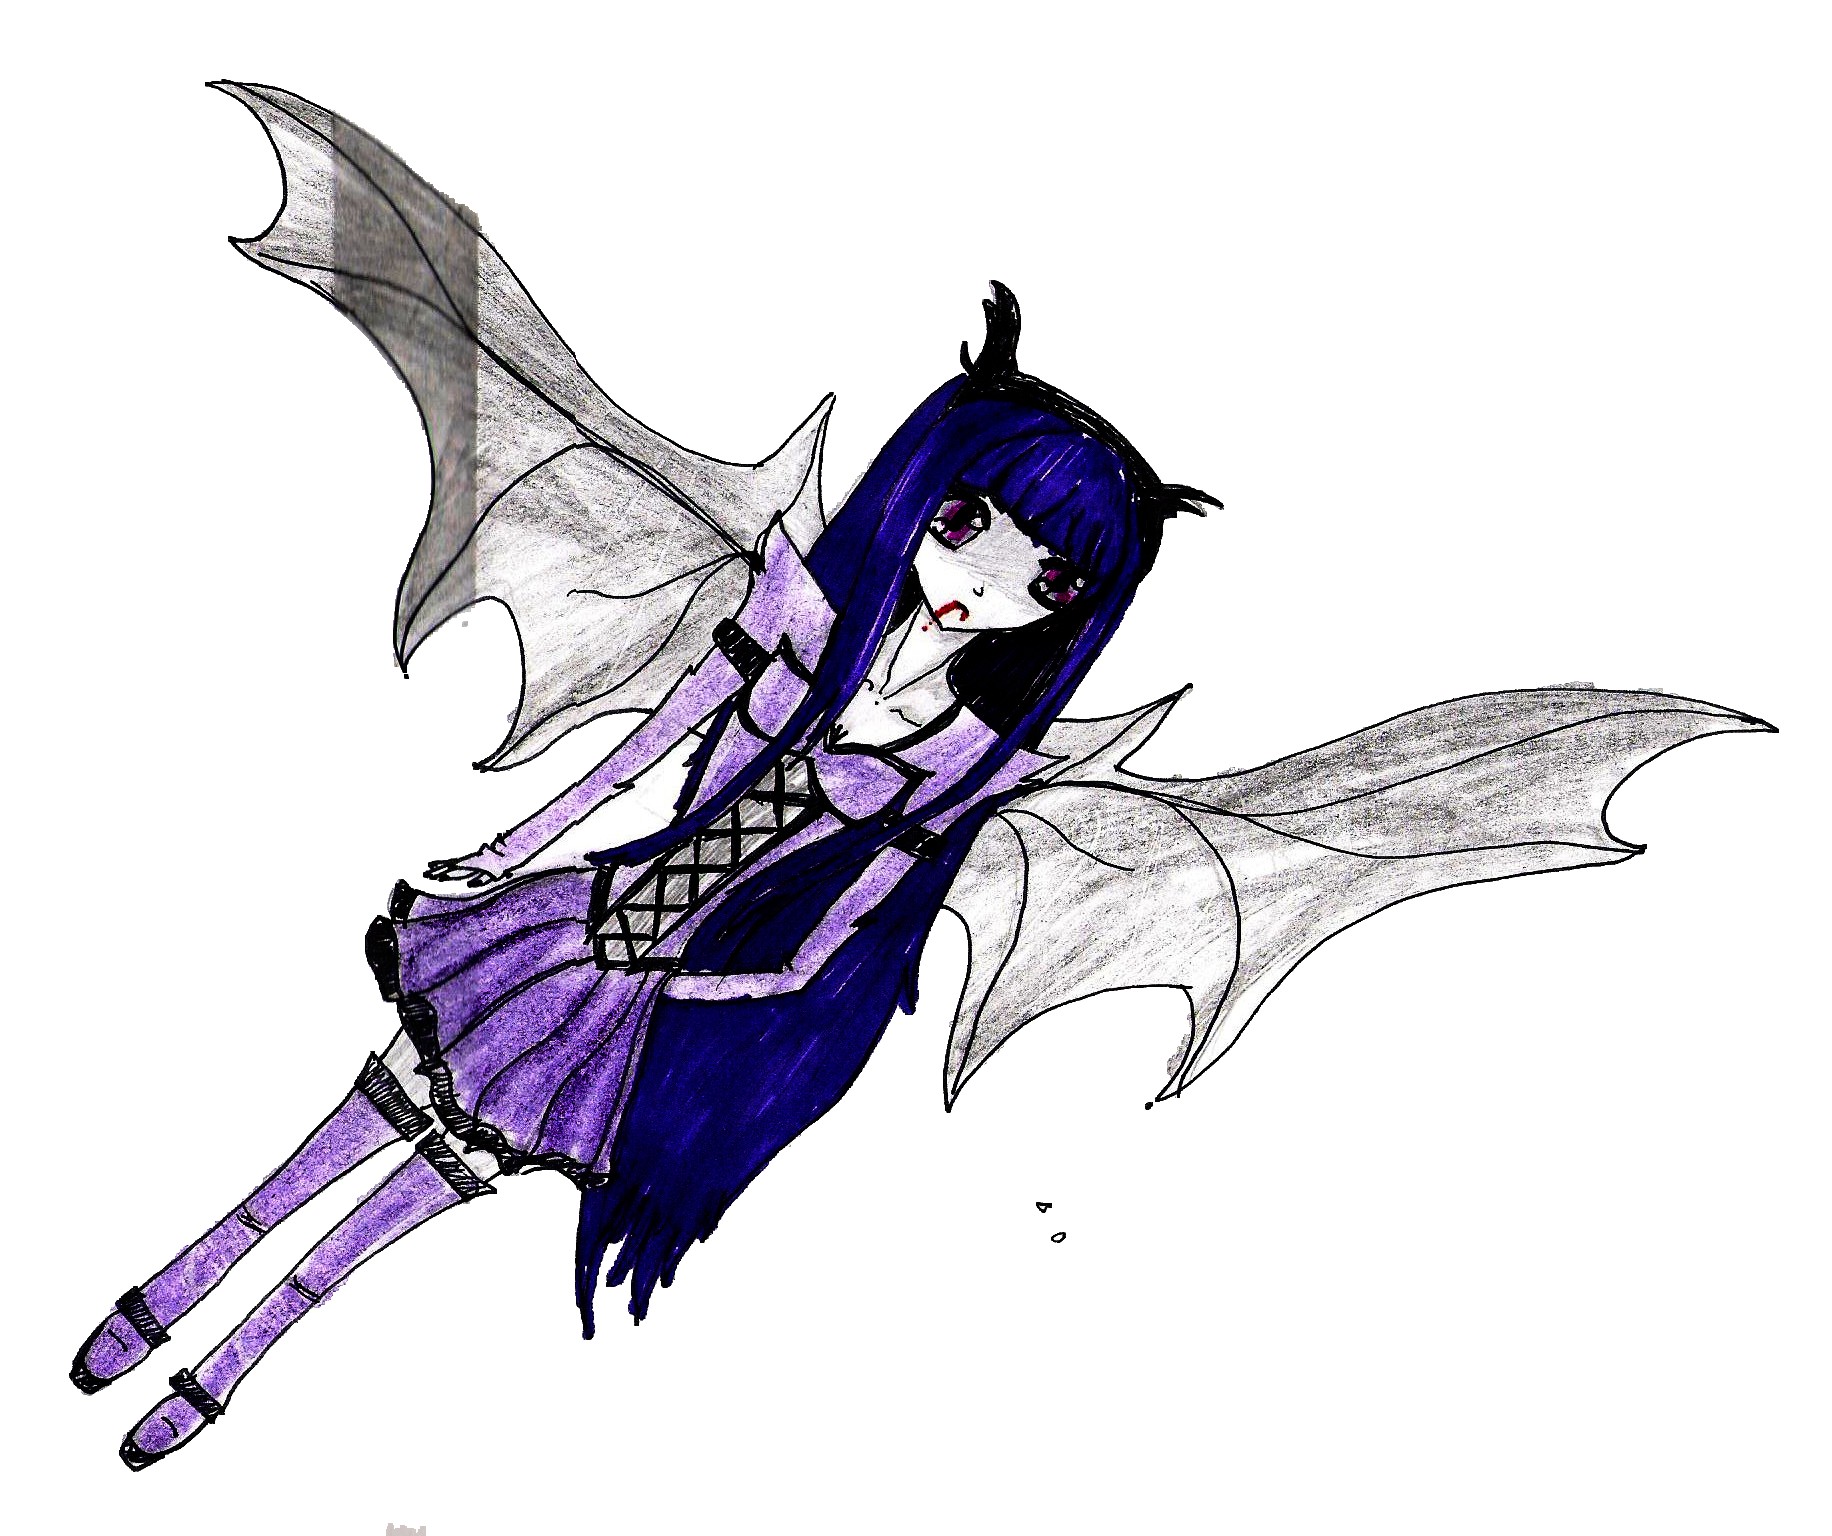 Vampire Anime Girl Drawing - DARKANG3L © 2014 - Dec 5, 2011